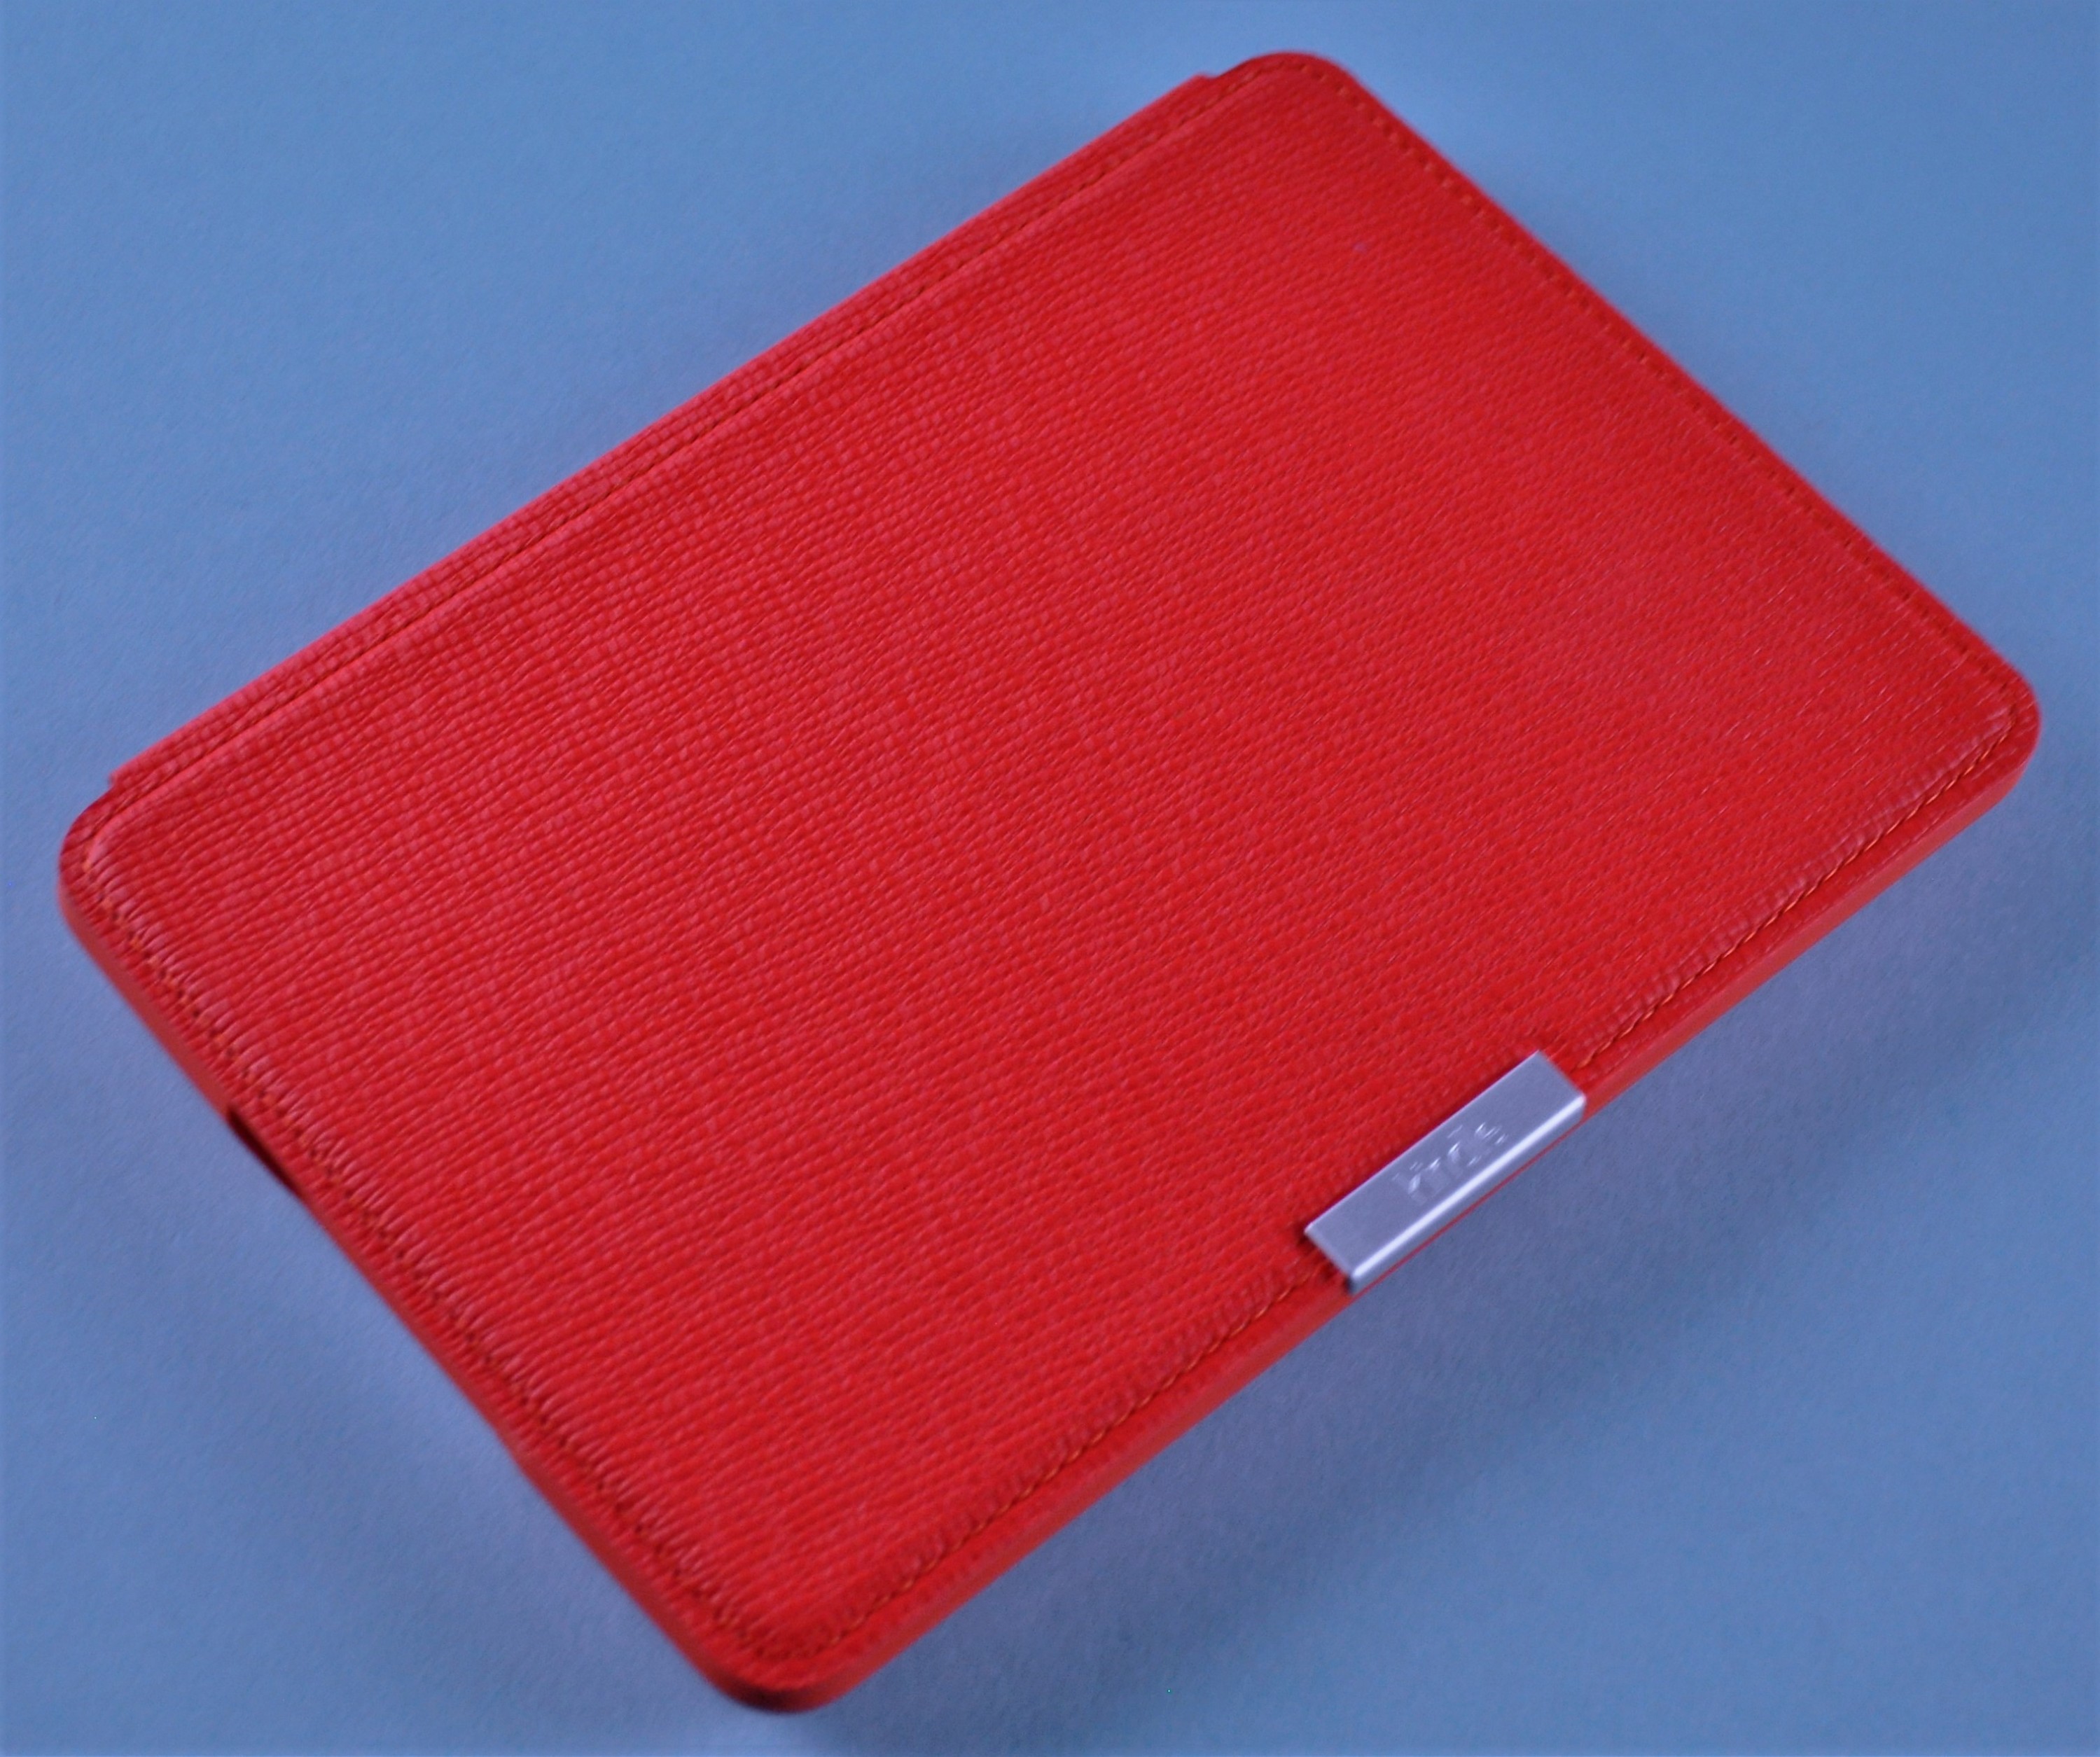 Kindle Leather Case; Persimmon Leather Kindle Case; Amazon Kindle